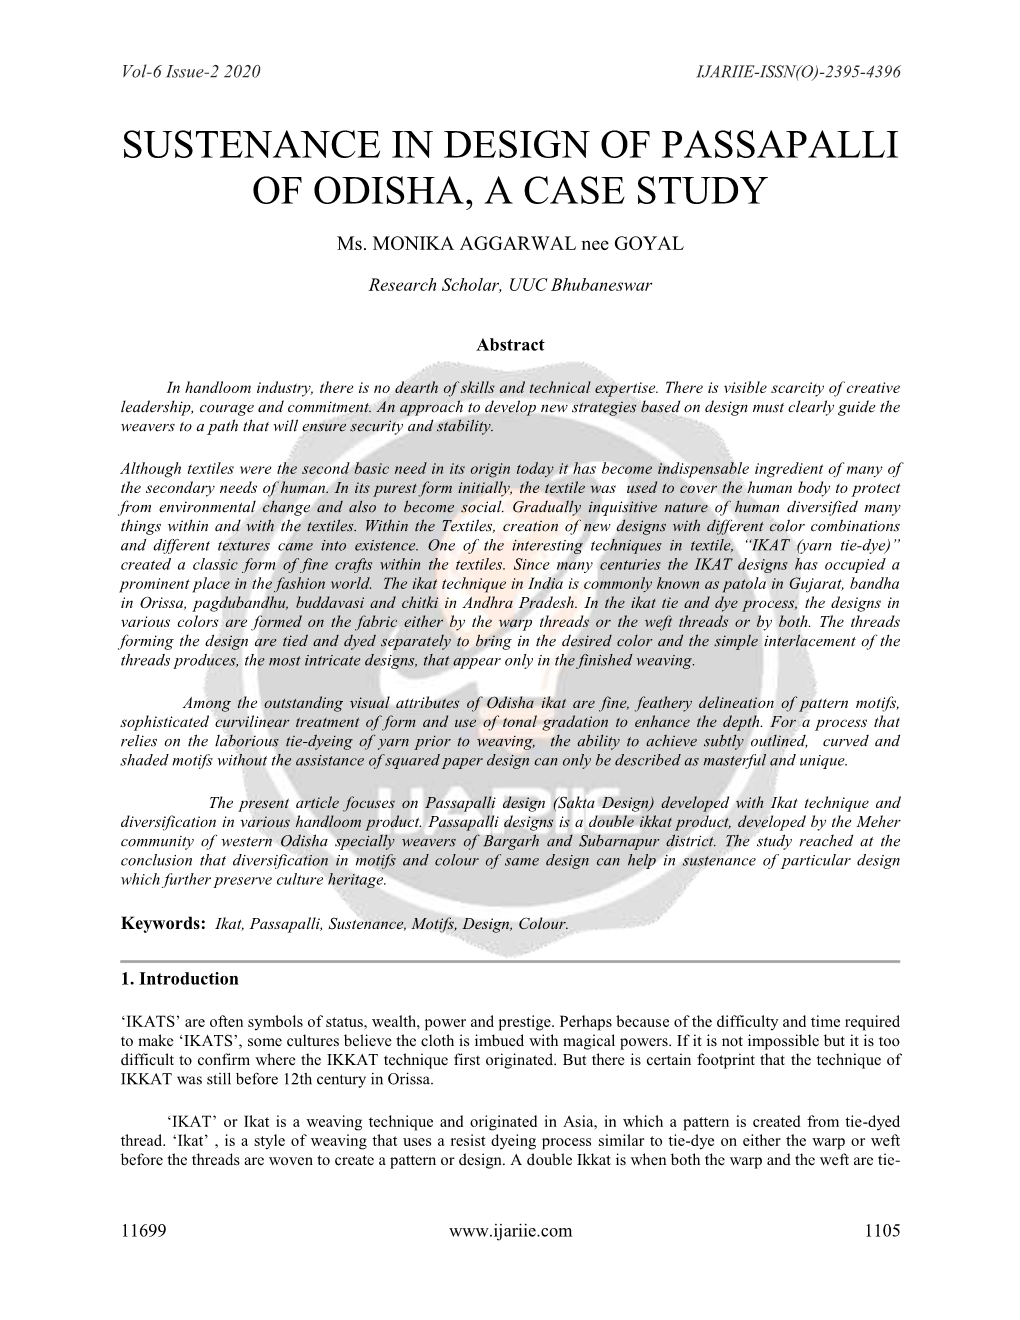 Sustenance in Design of Passapalli of Odisha, a Case Study